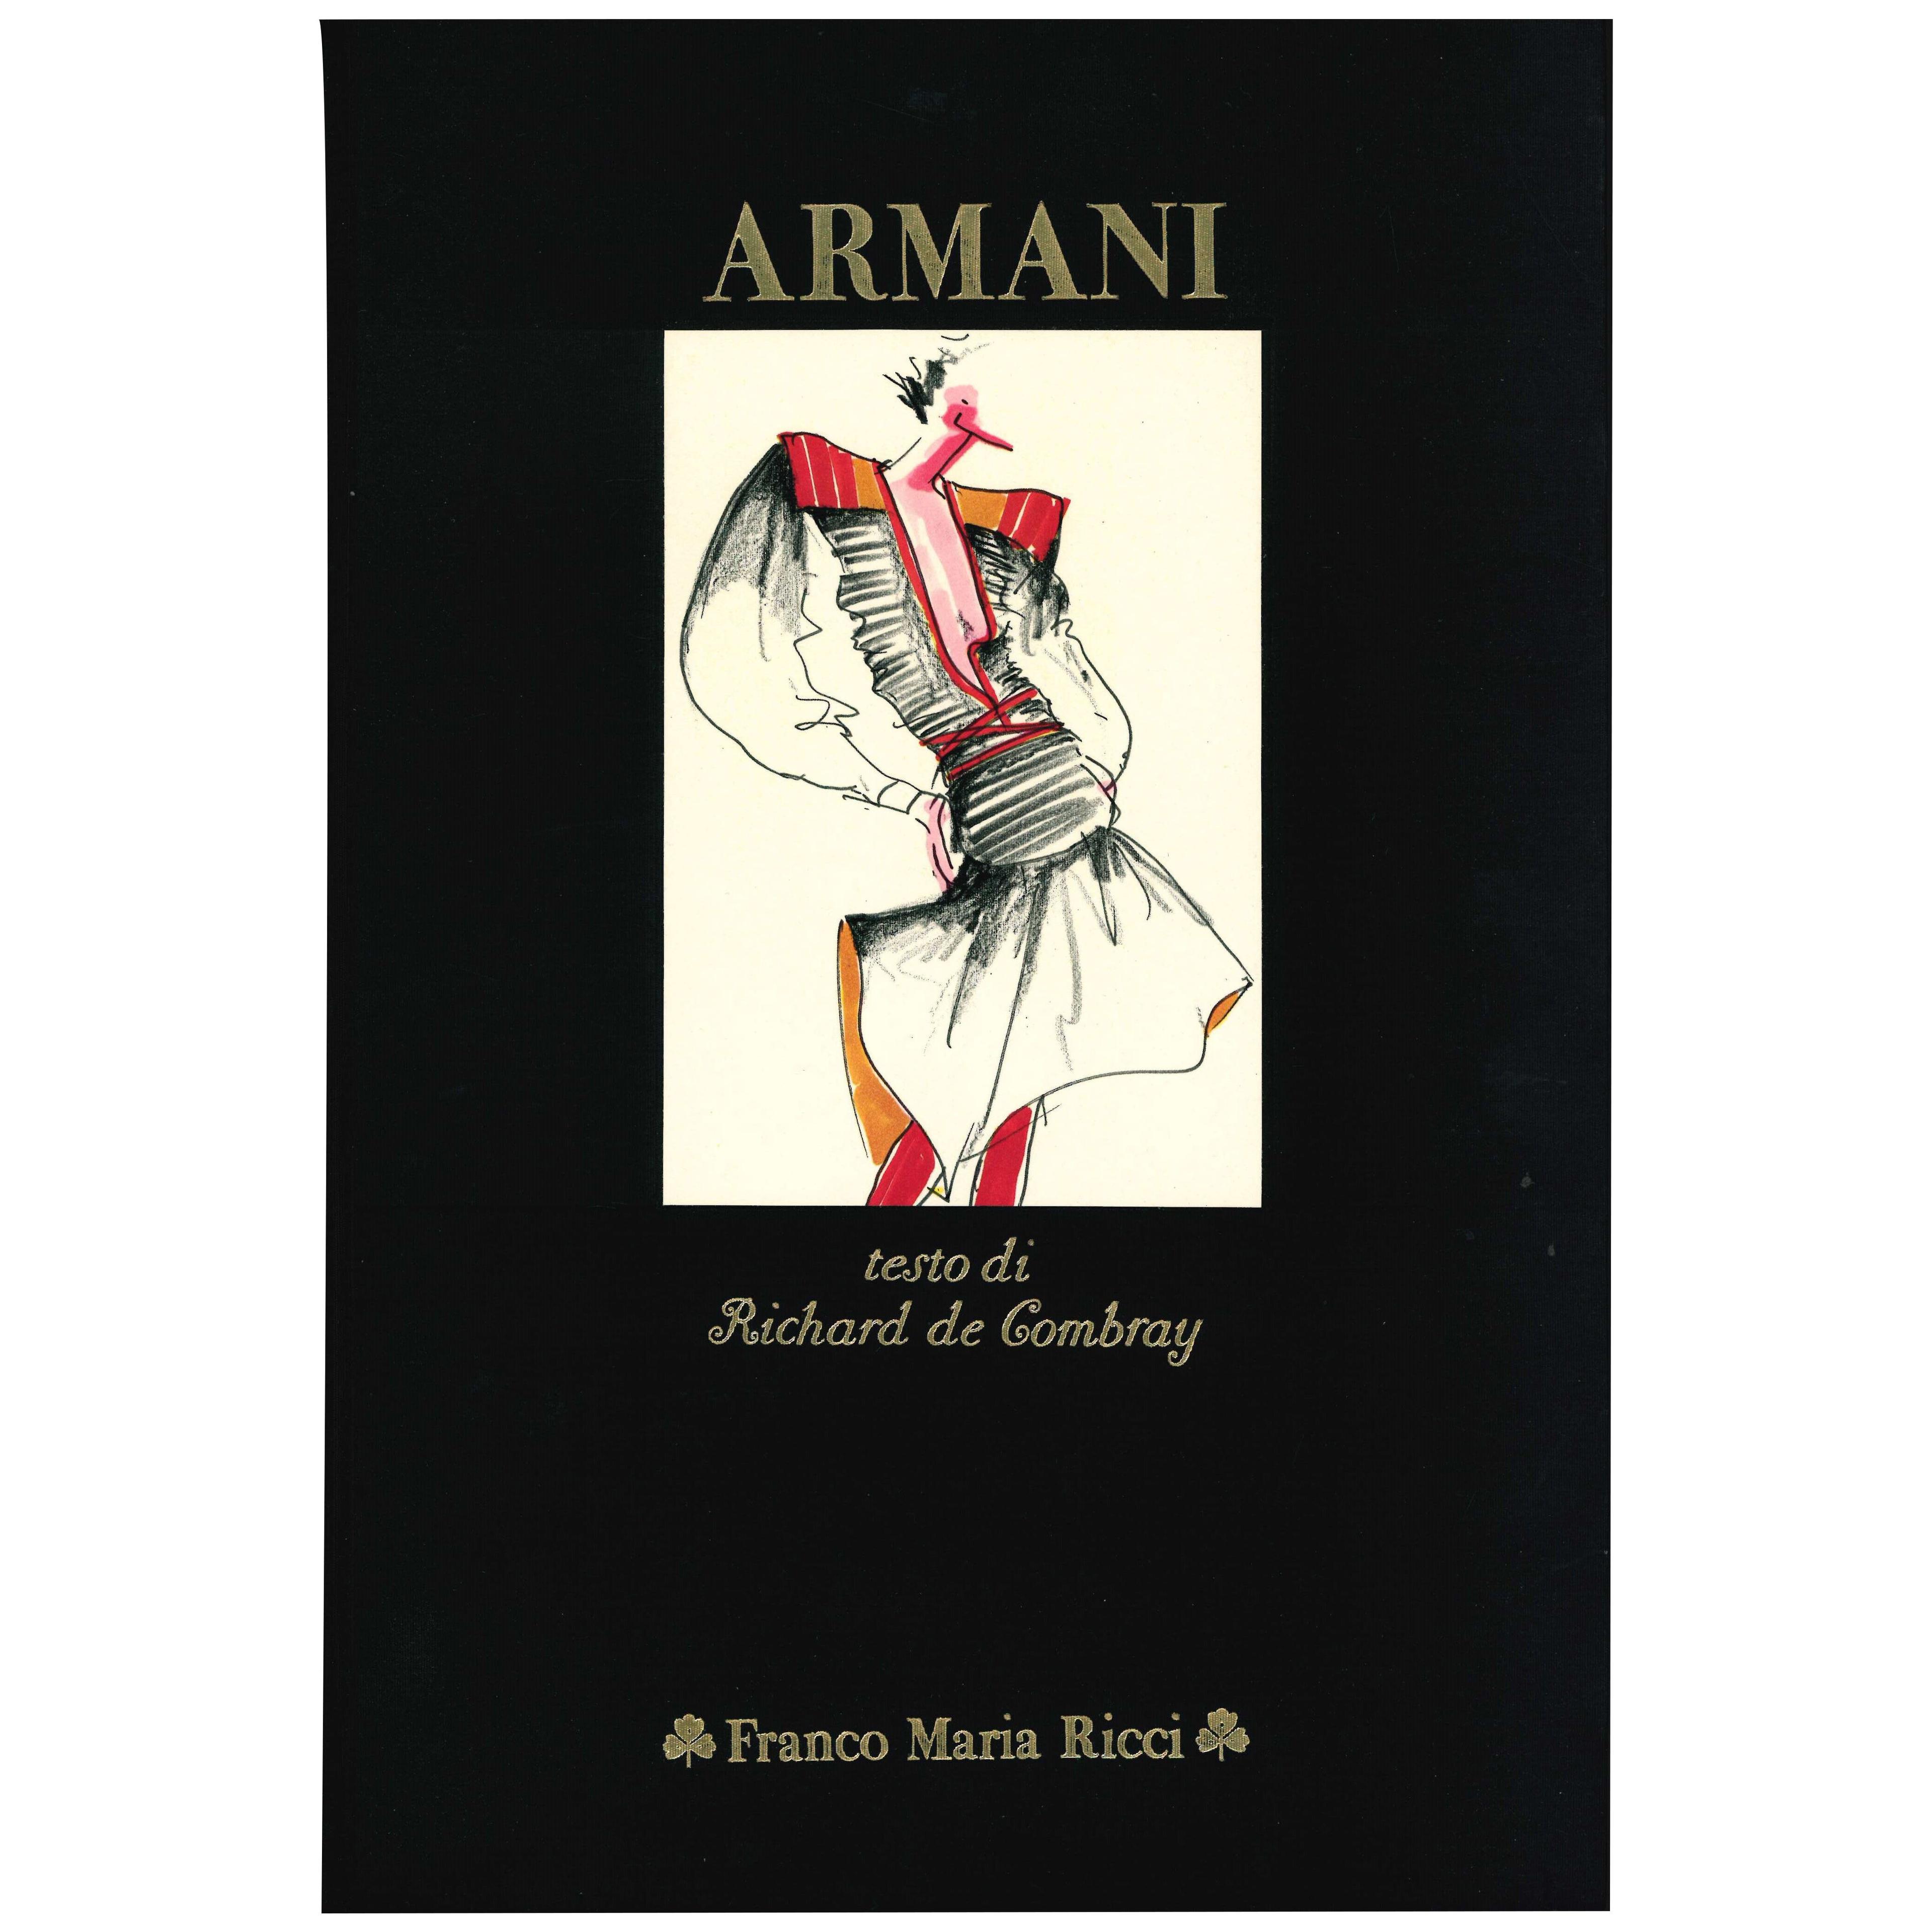 ARMANI - book on Italian fashion designer